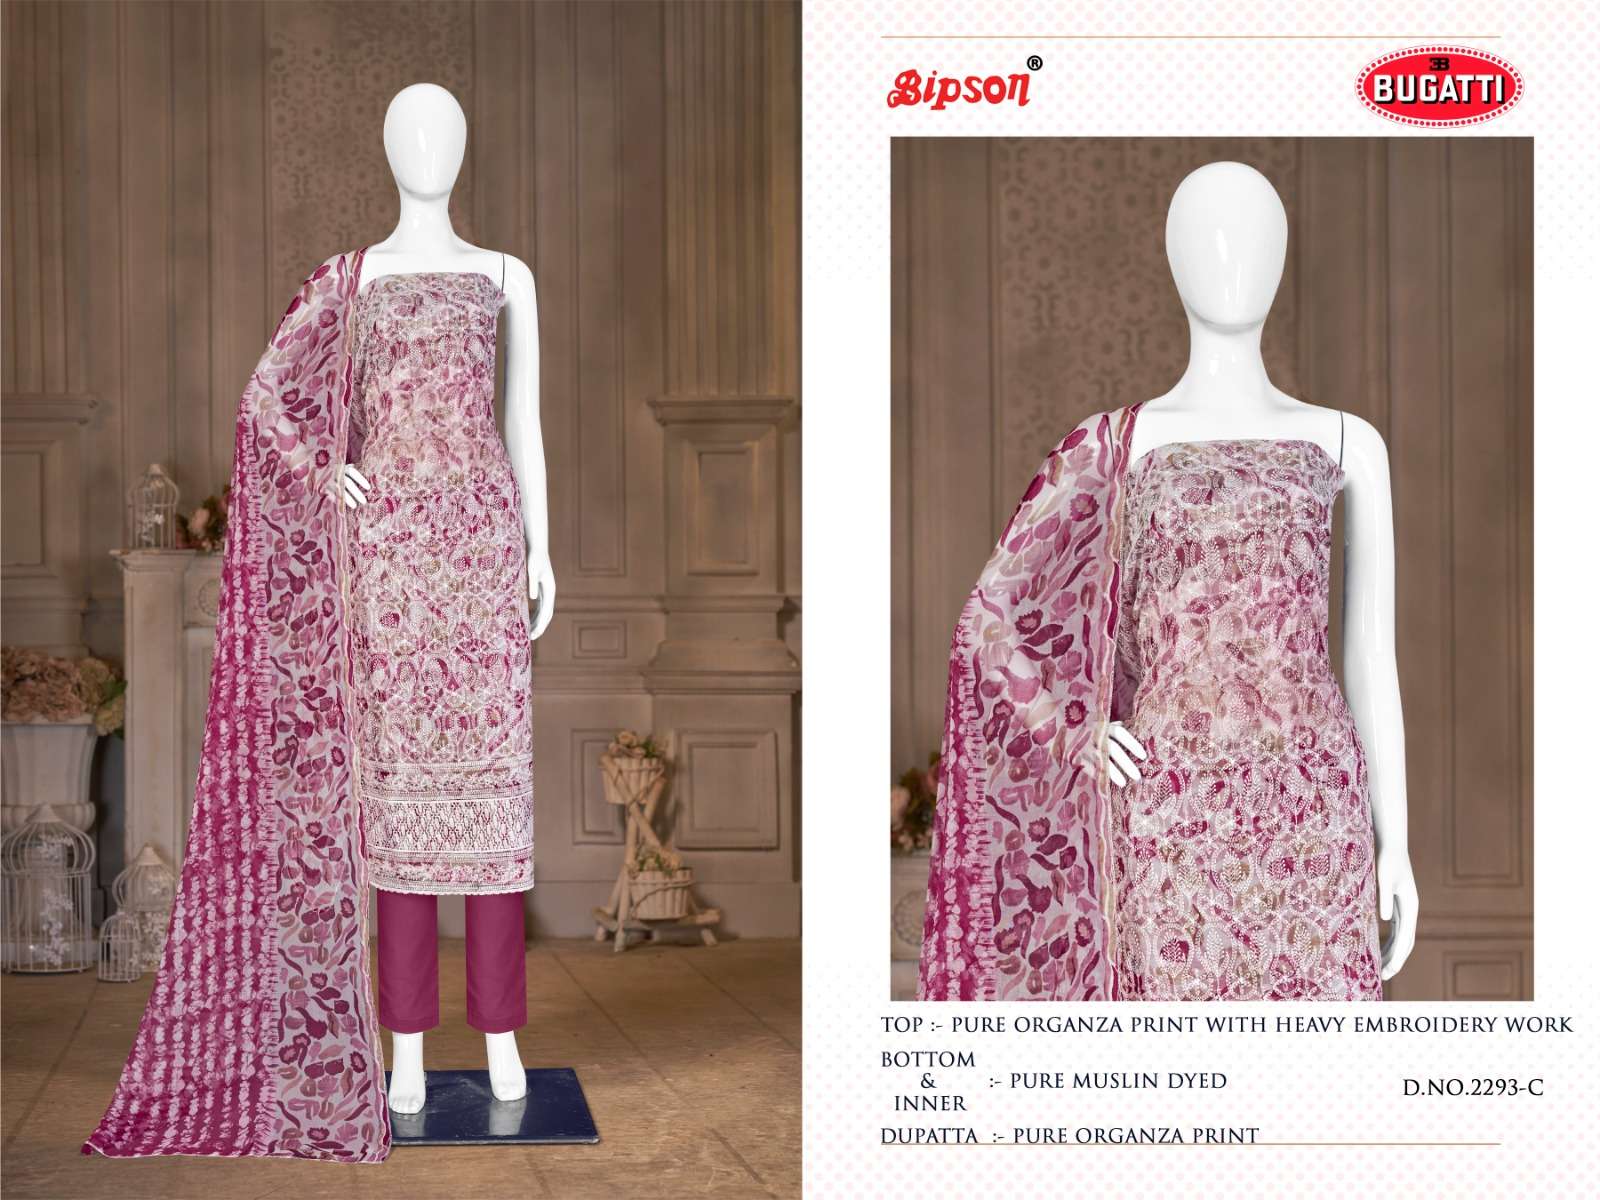 bipson prints bugatti 2293 colour series latest fancy pakistani salwar kameez wholesaler surat gujarat